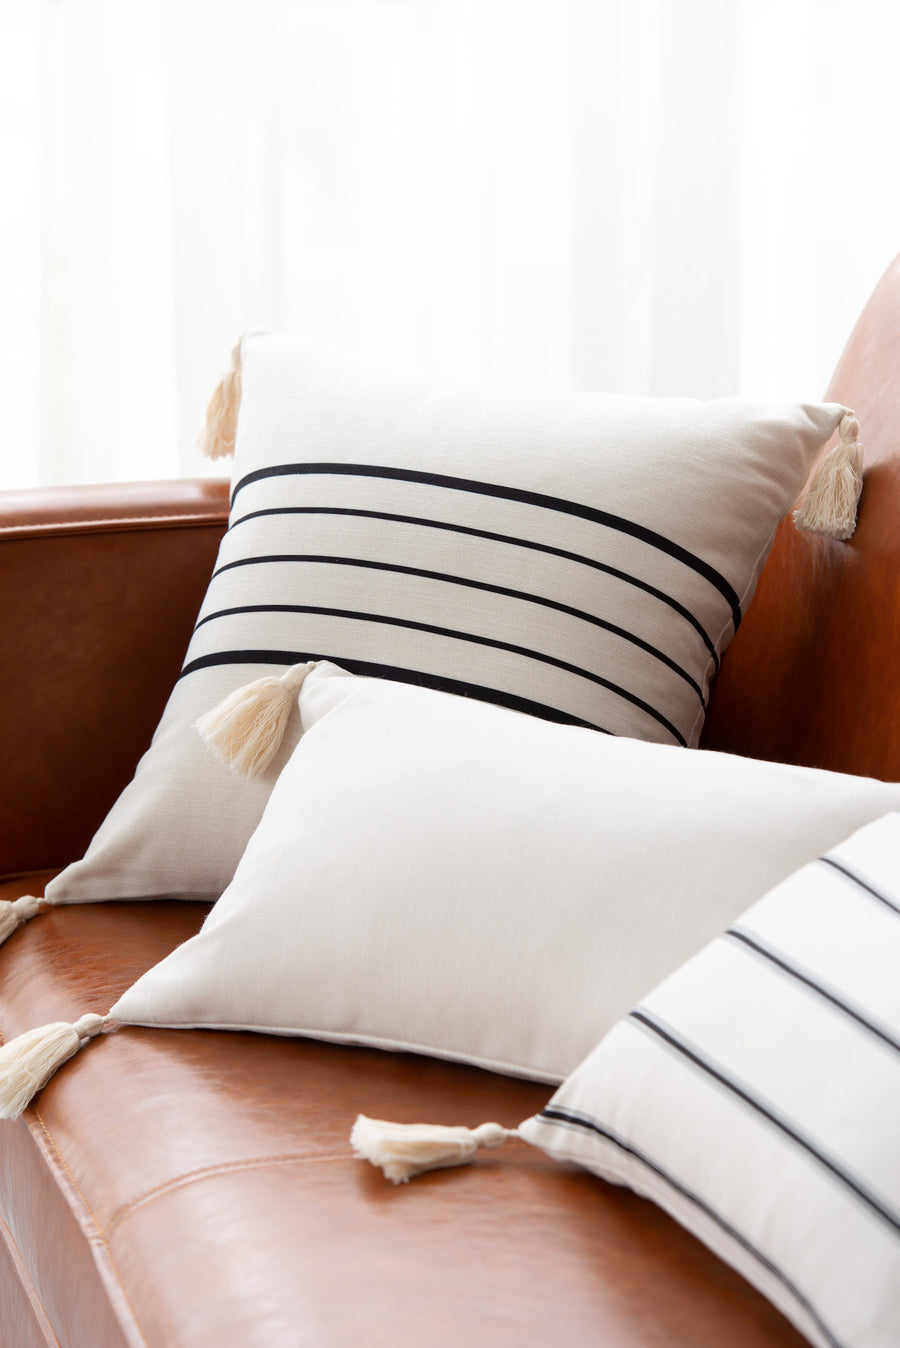 Modern Boho Outdoor Pillow Cover, Striped Tassel, Beige, 18